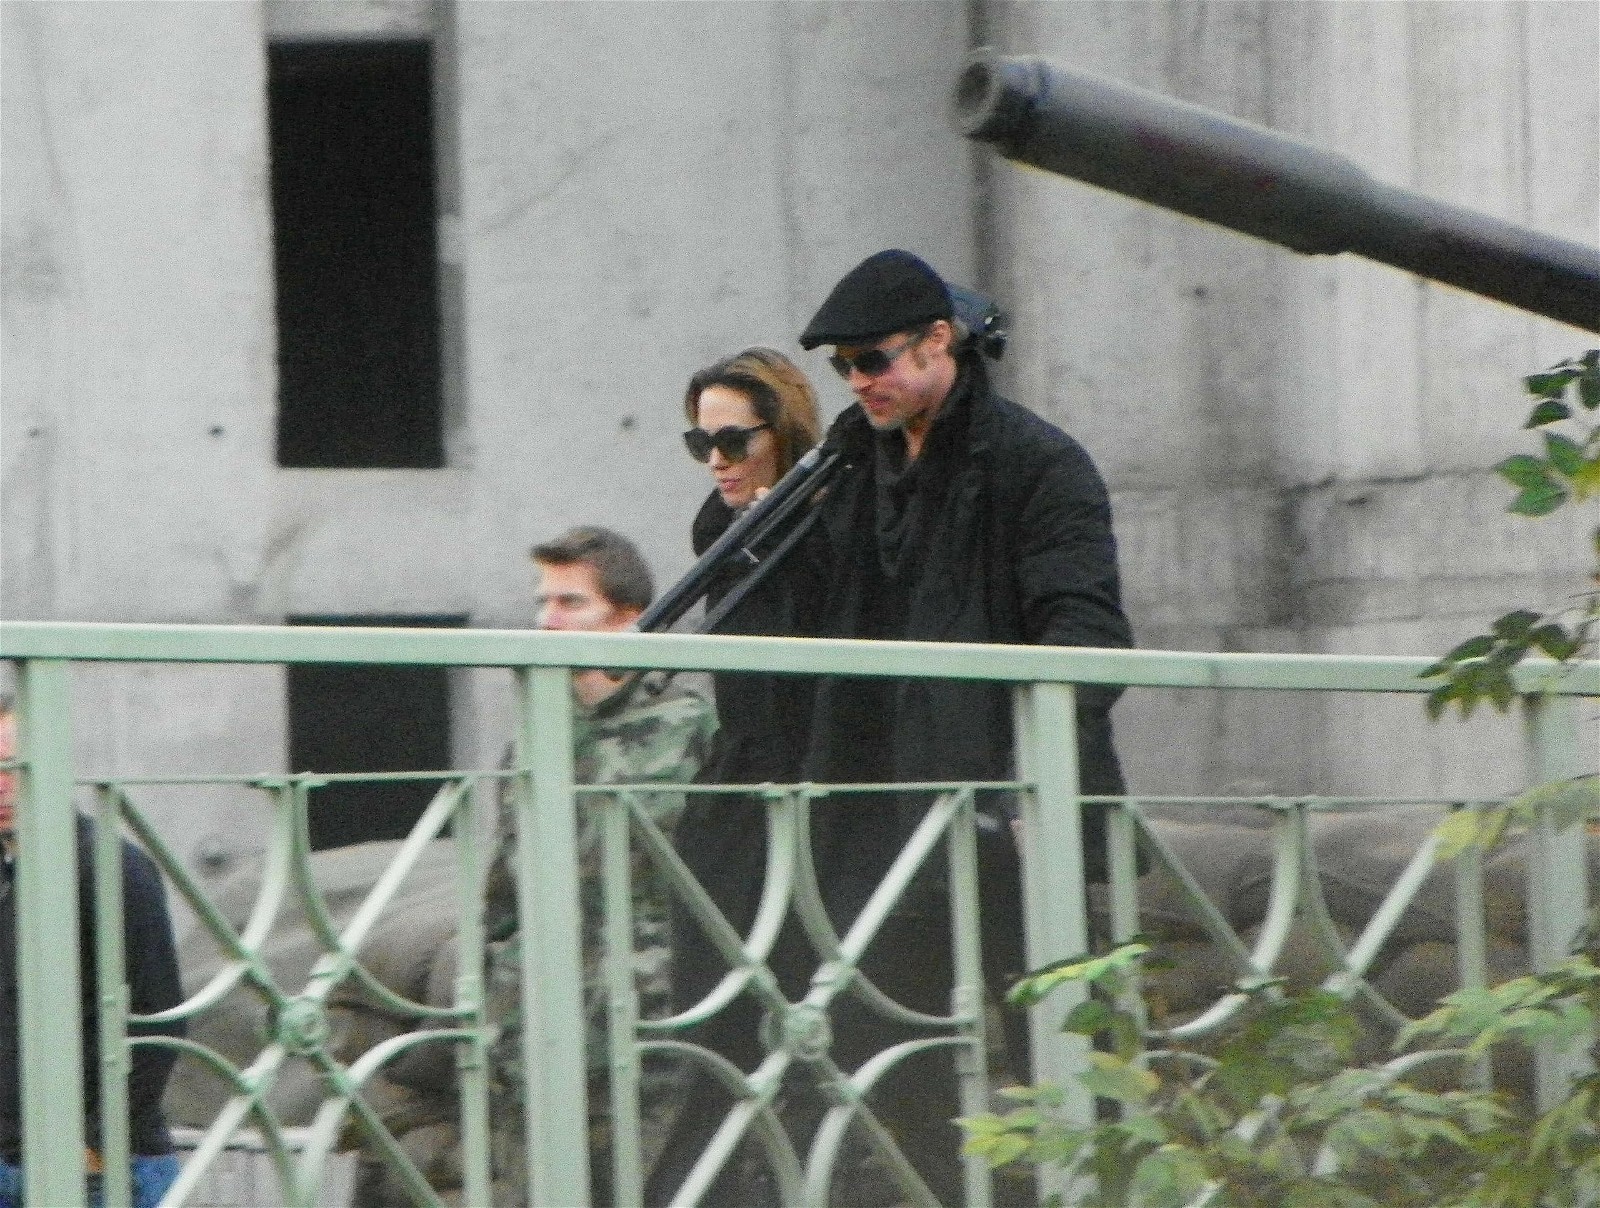 Brad Pitt and Angelina Jolie walking together